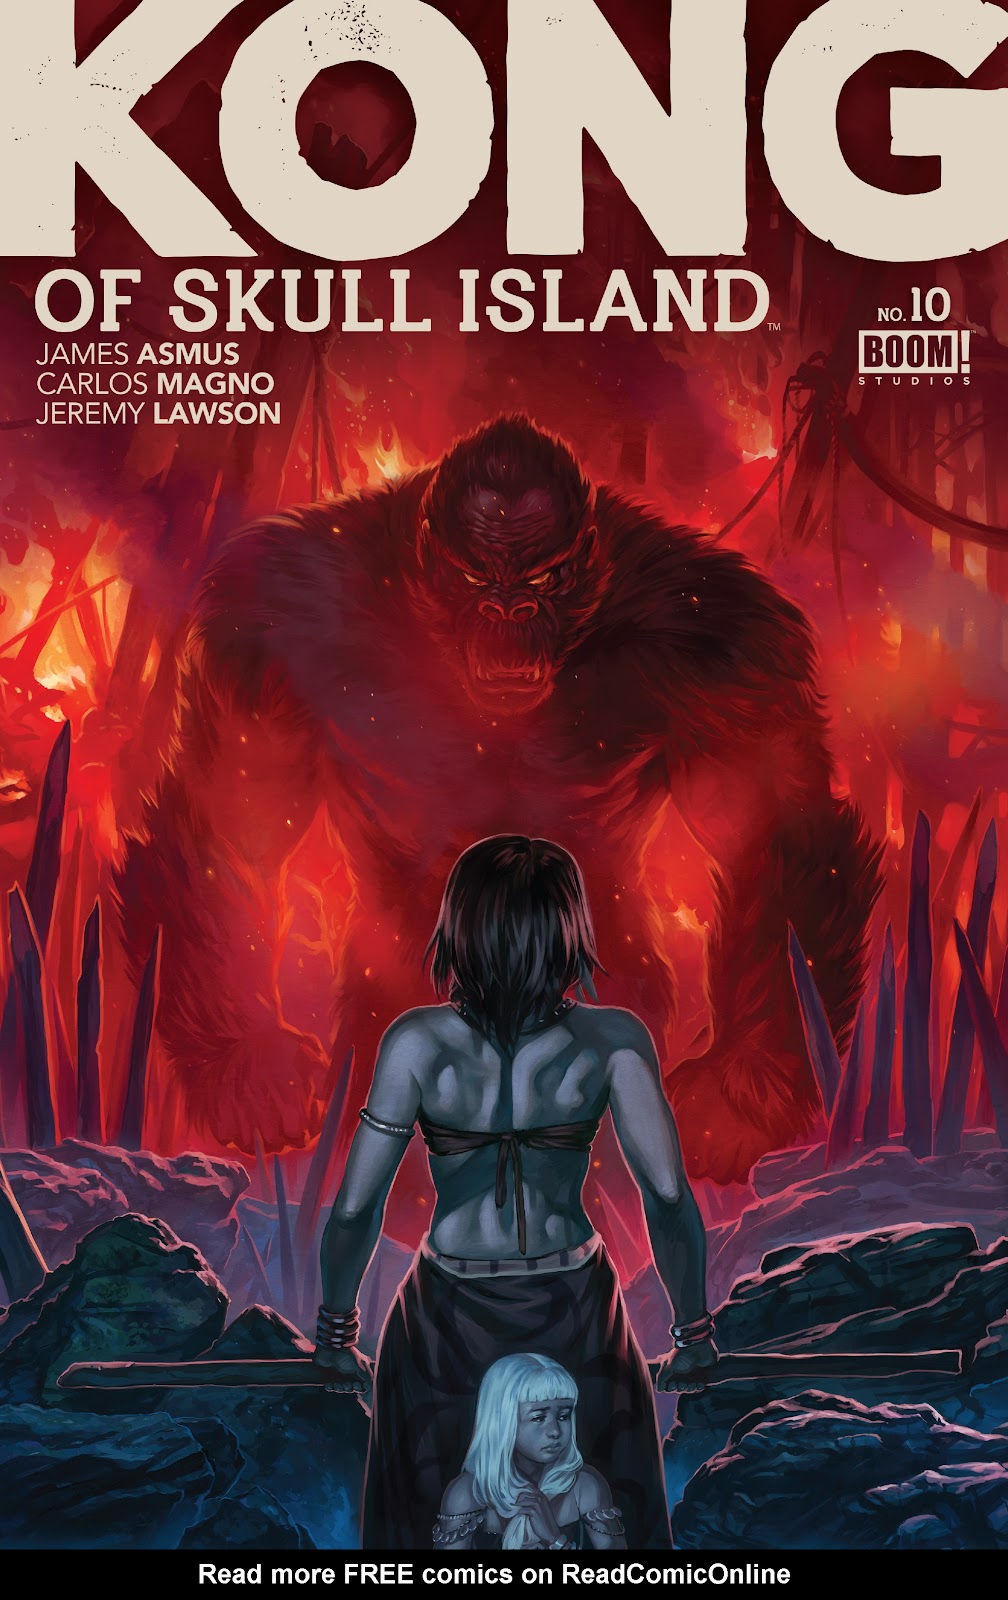 Skull island online free